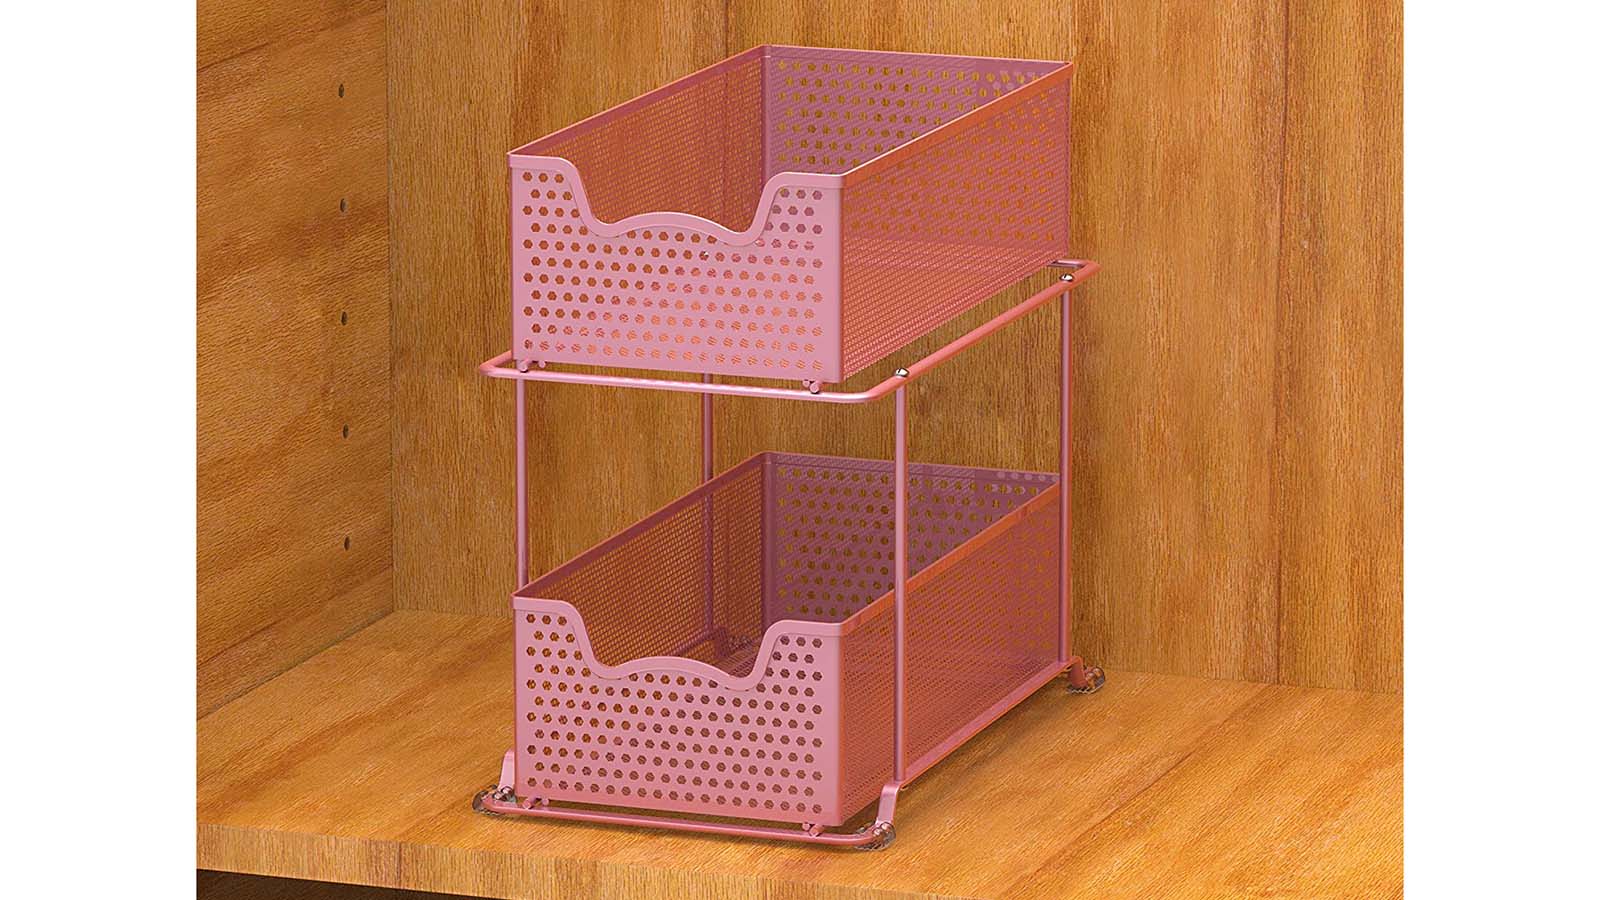 https://media.cnn.com/api/v1/images/stellar/prod/230217155342-amazon-simple-houseware-2-tier-sliding-cabinet-basket-organizer-drawer.jpg?c=original